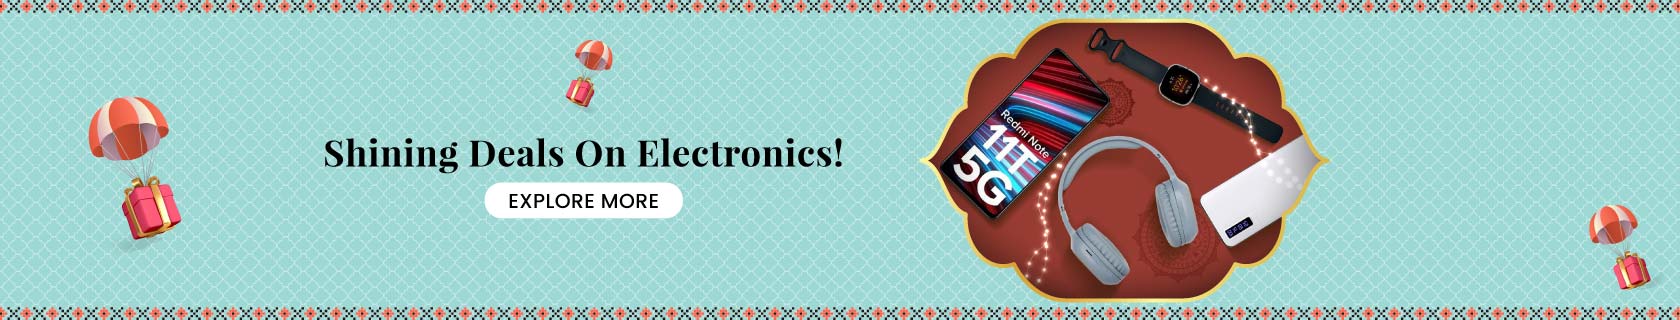 Electronics_Web